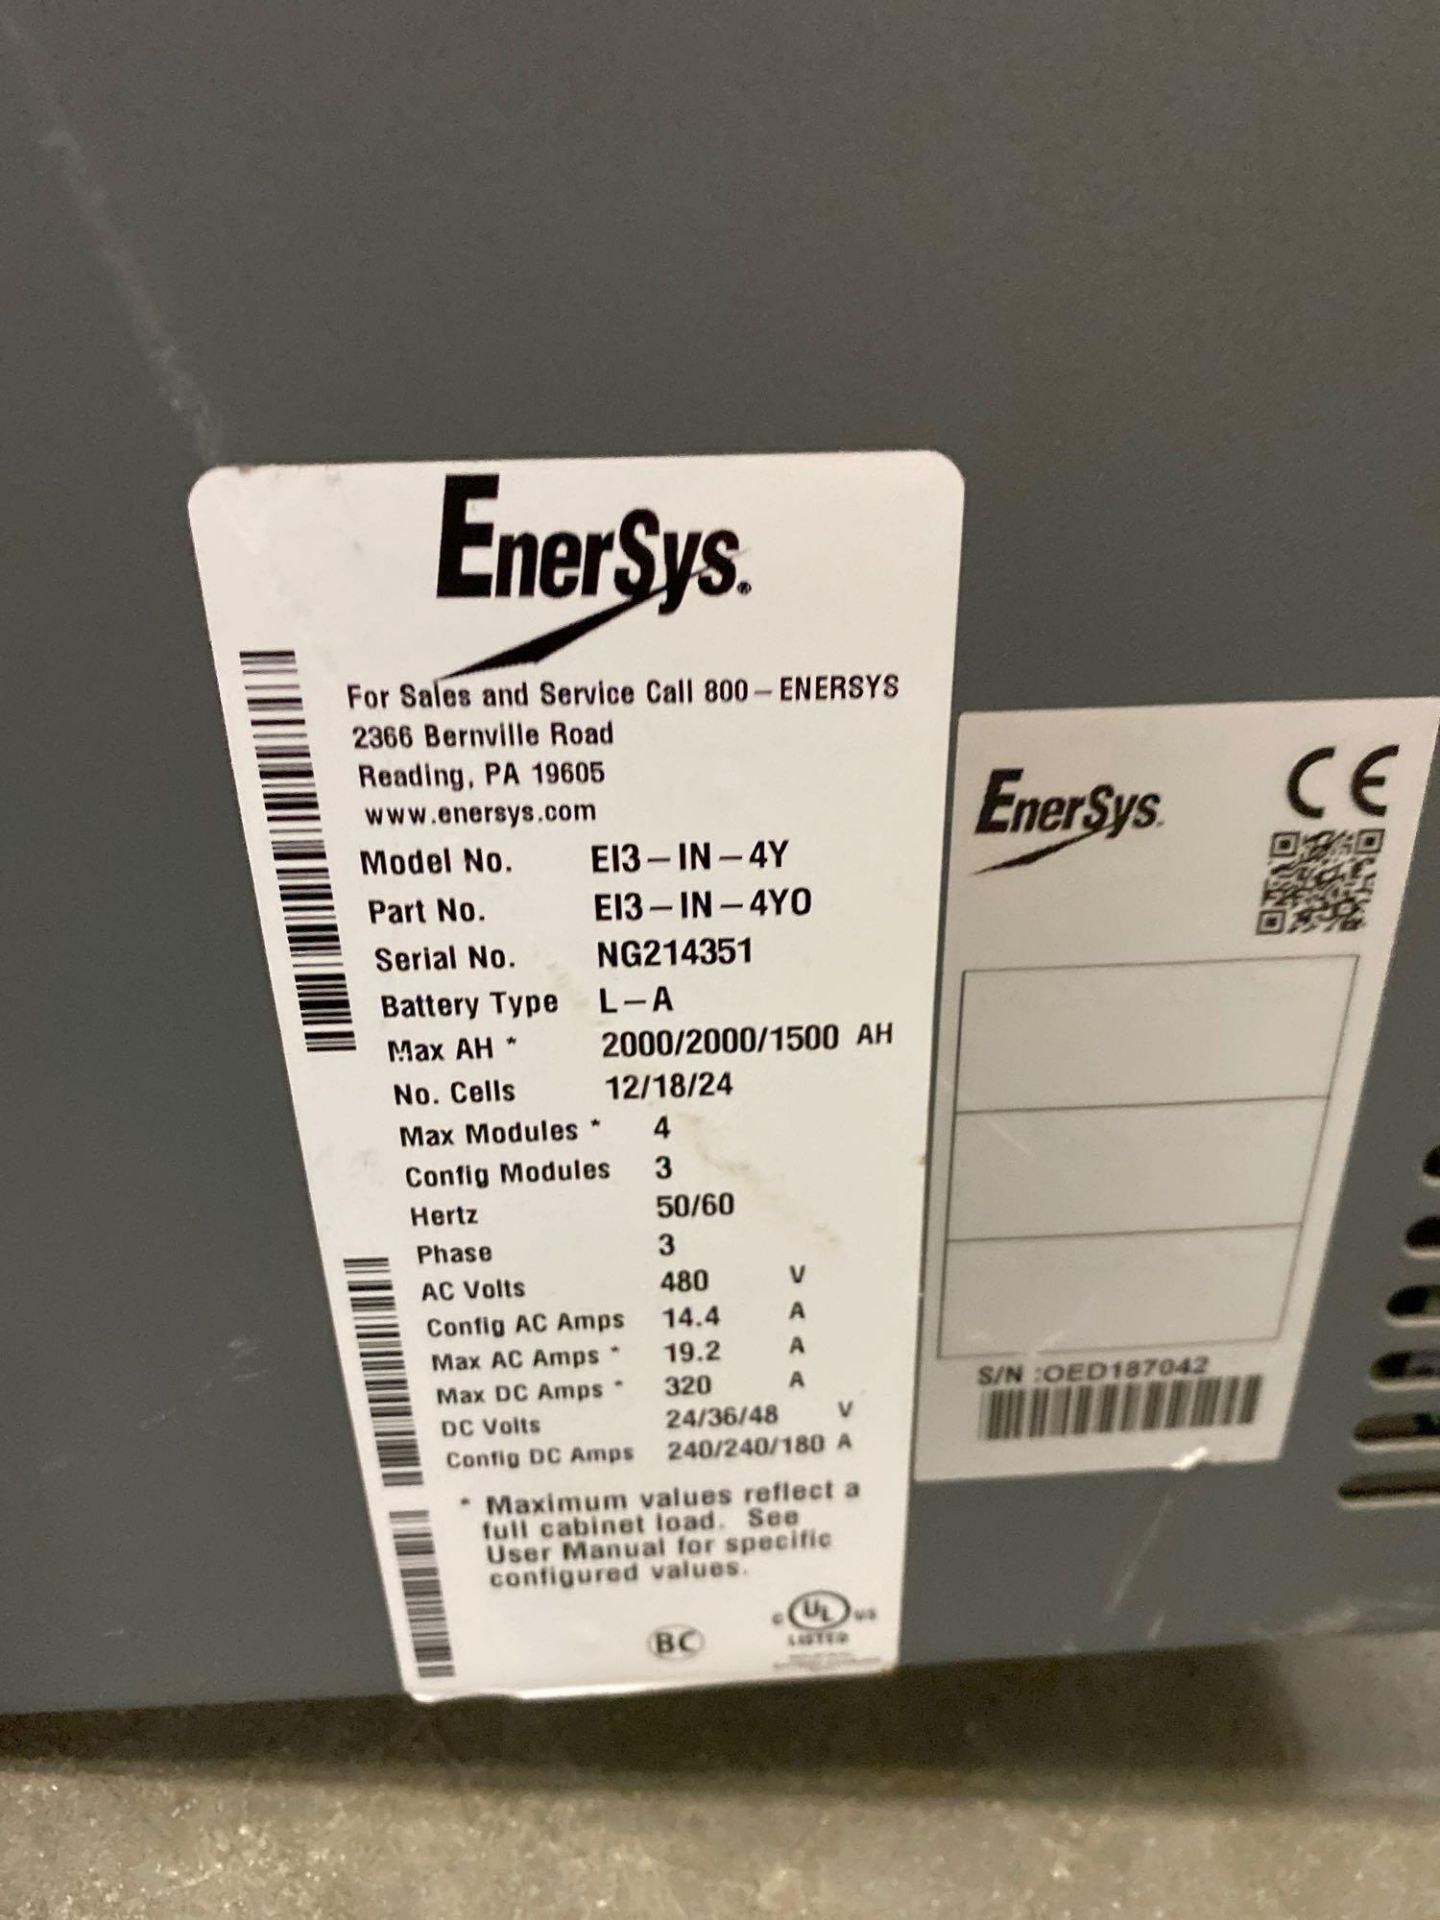 ENERSYS ENFORCER IMPAQ BATTERY CHARGER MODEL EI3-IN-4Y, 24,36,48V - Image 5 of 5